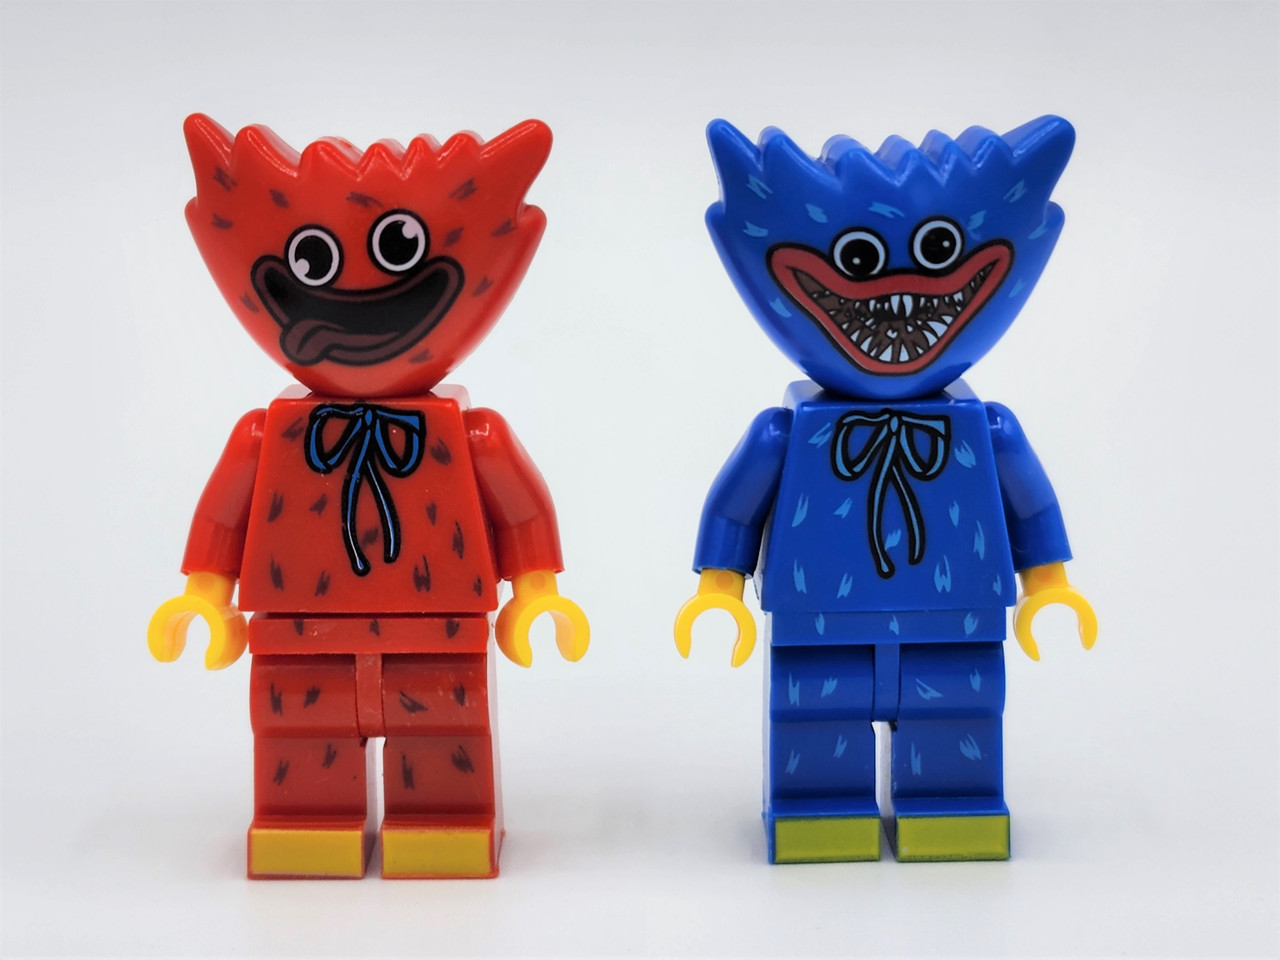 New Officially Licensed Poppy Playtime Toys & Plush! Plus Legos